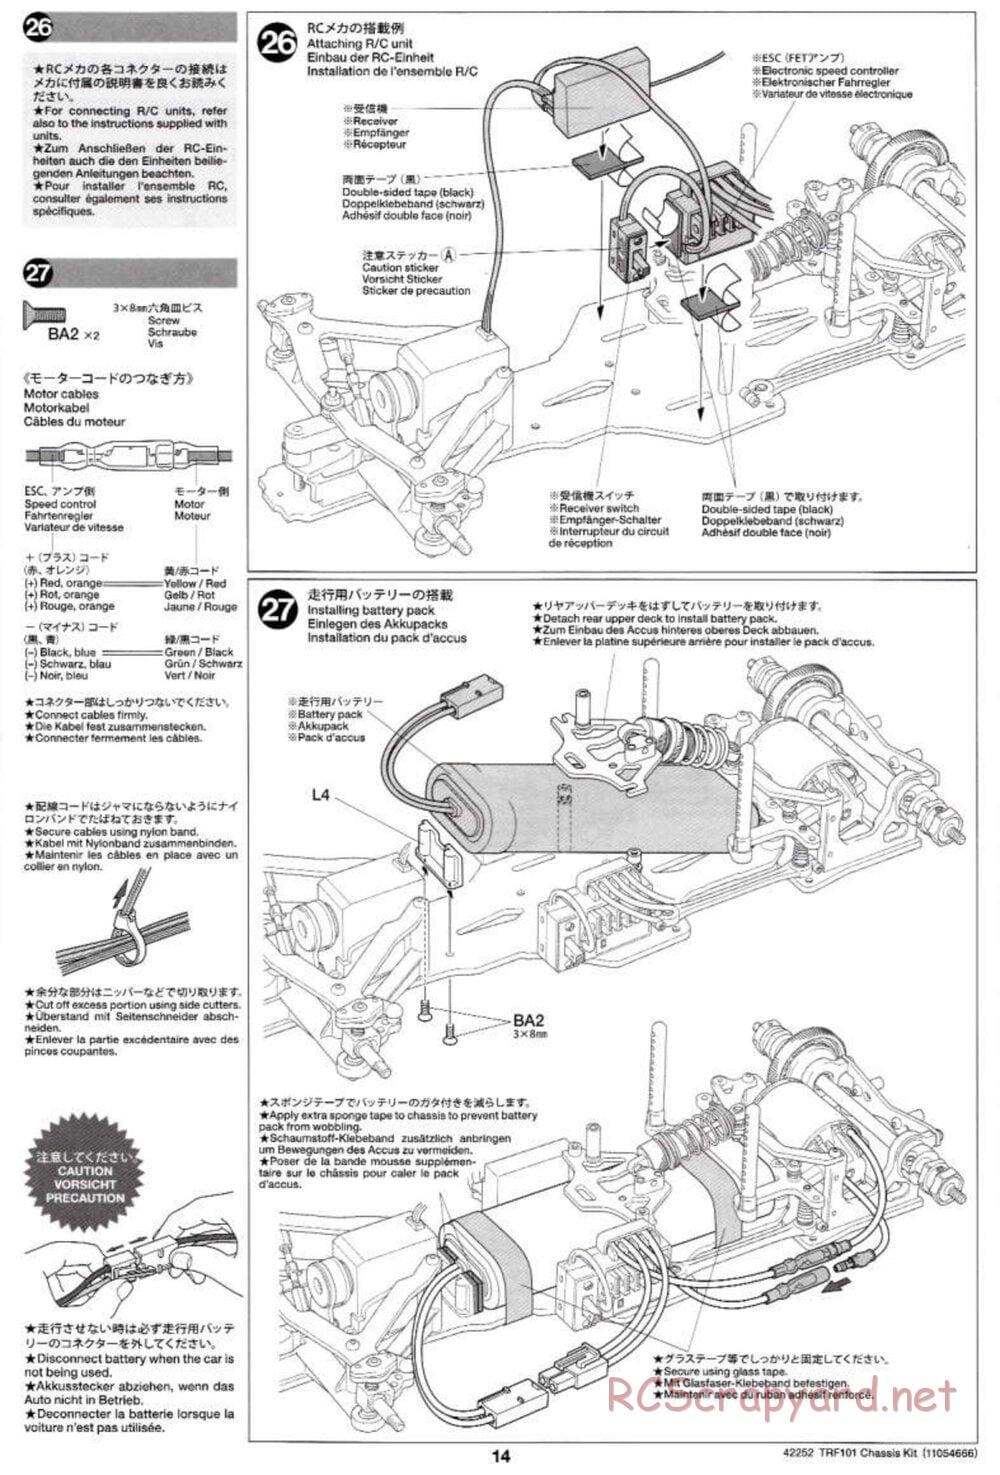 Tamiya - TRF101 Chassis - Manual - Page 14